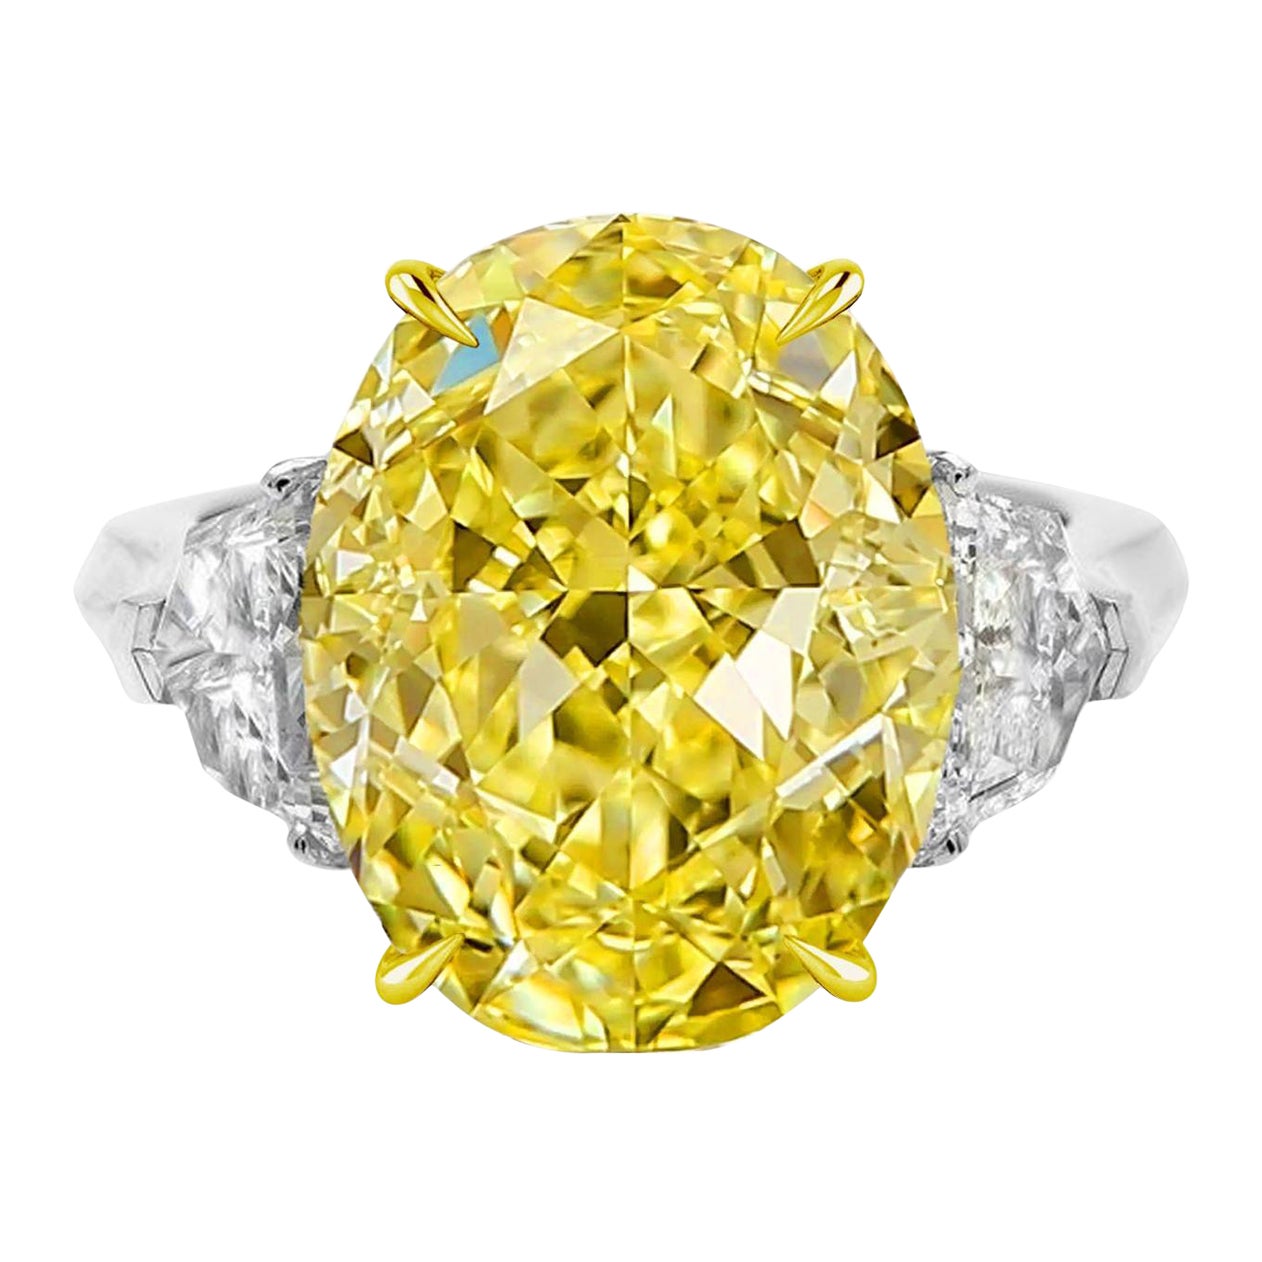 GIA Certified 5.18 Carat Fancy Yellow Diamond Ring FLAWLESS 